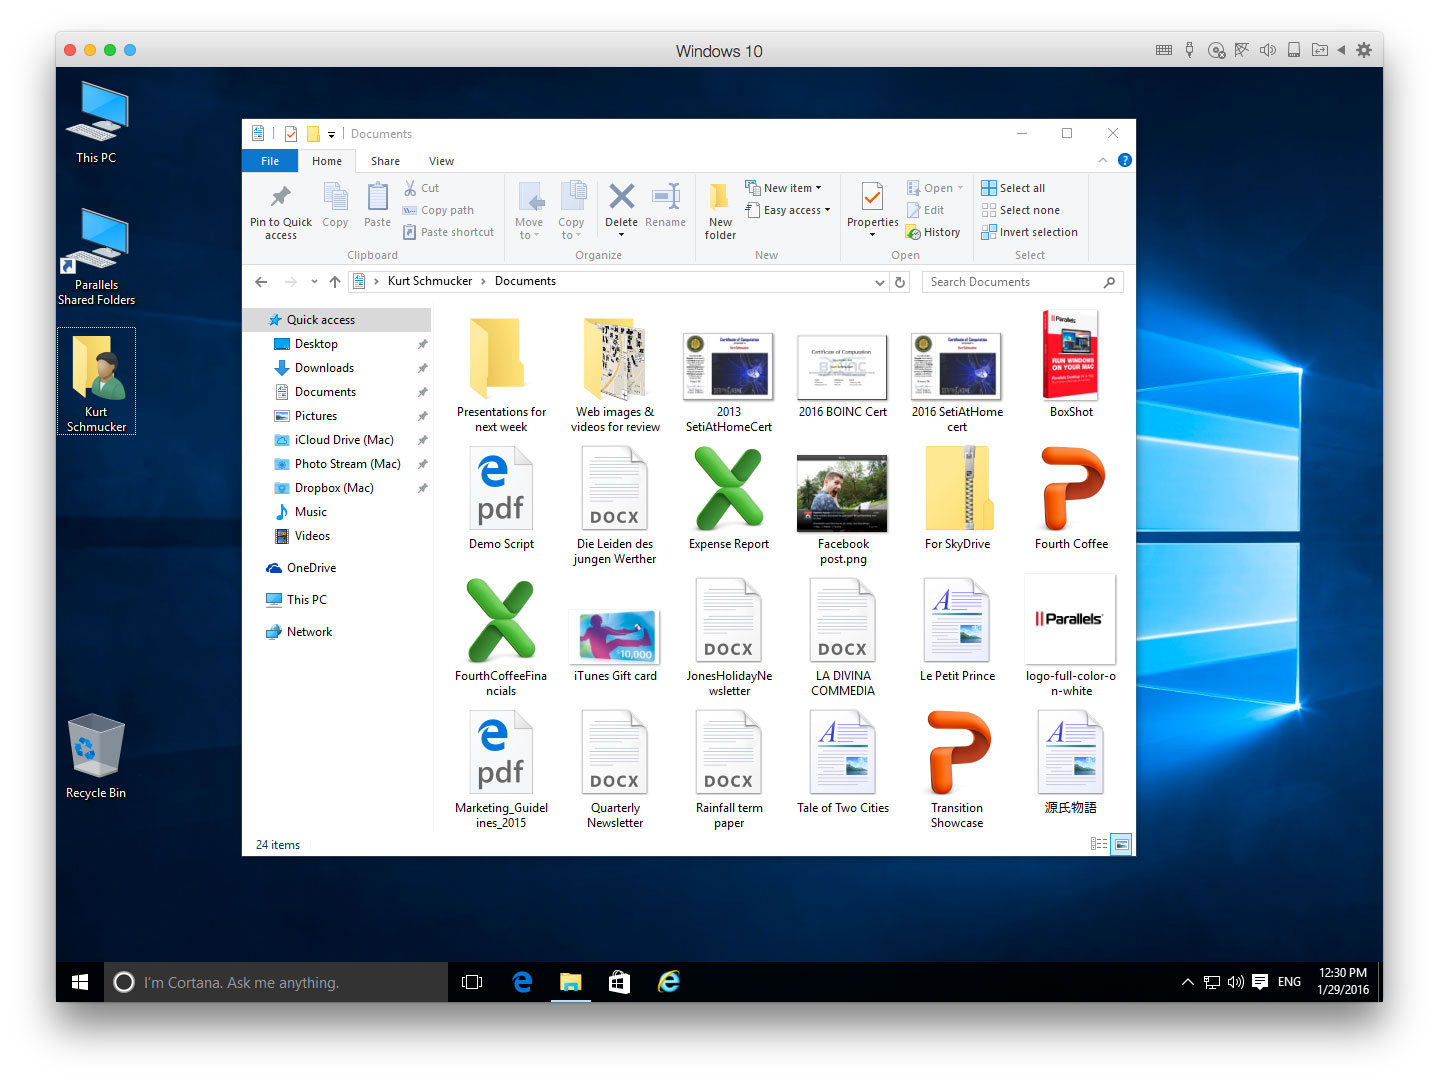 Windows 10 Explorer tips